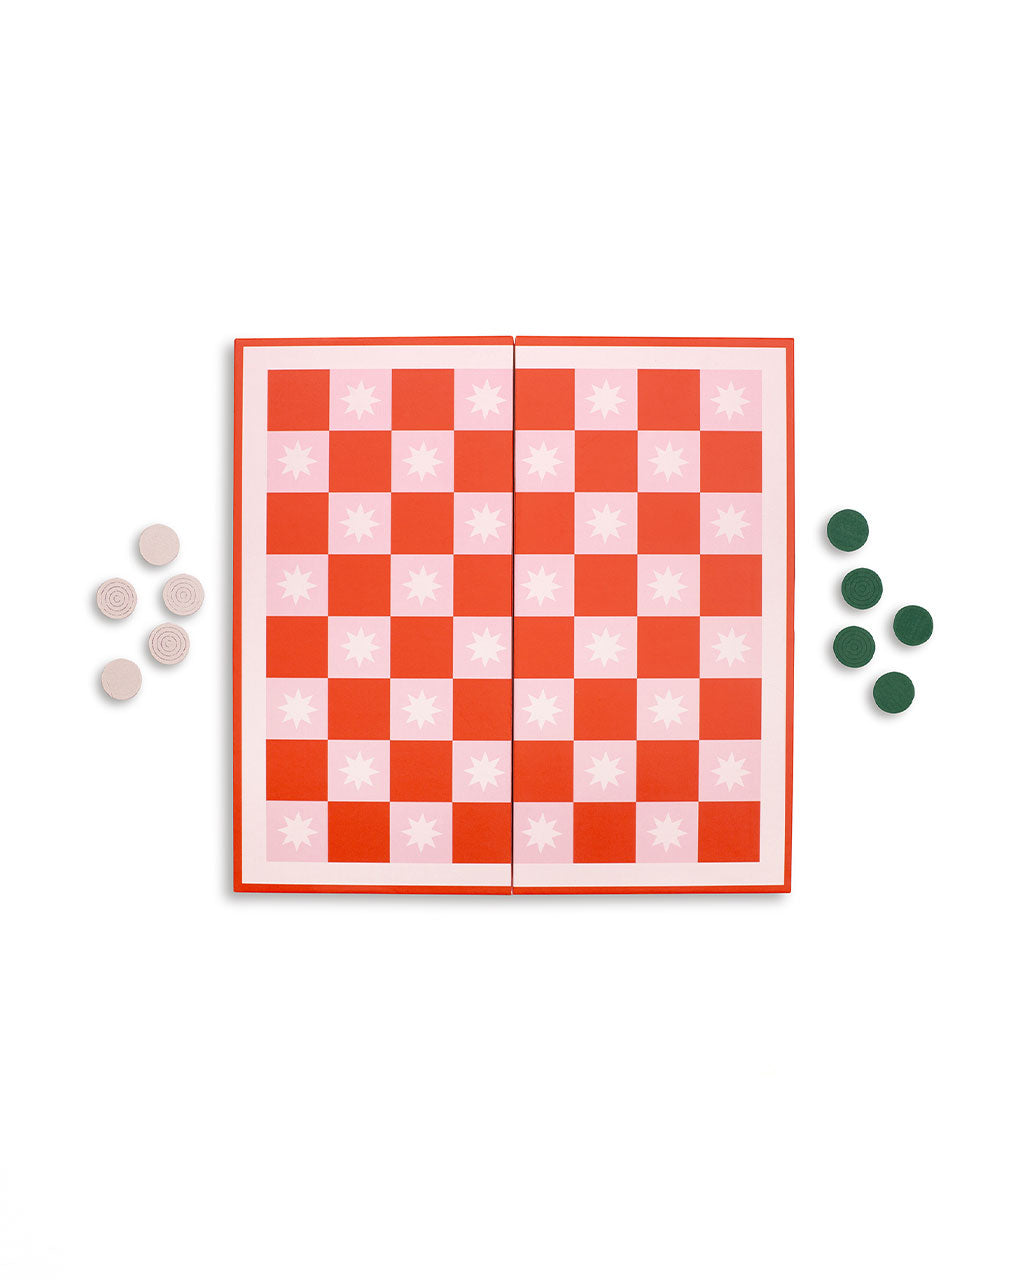 Checkers, Board Game